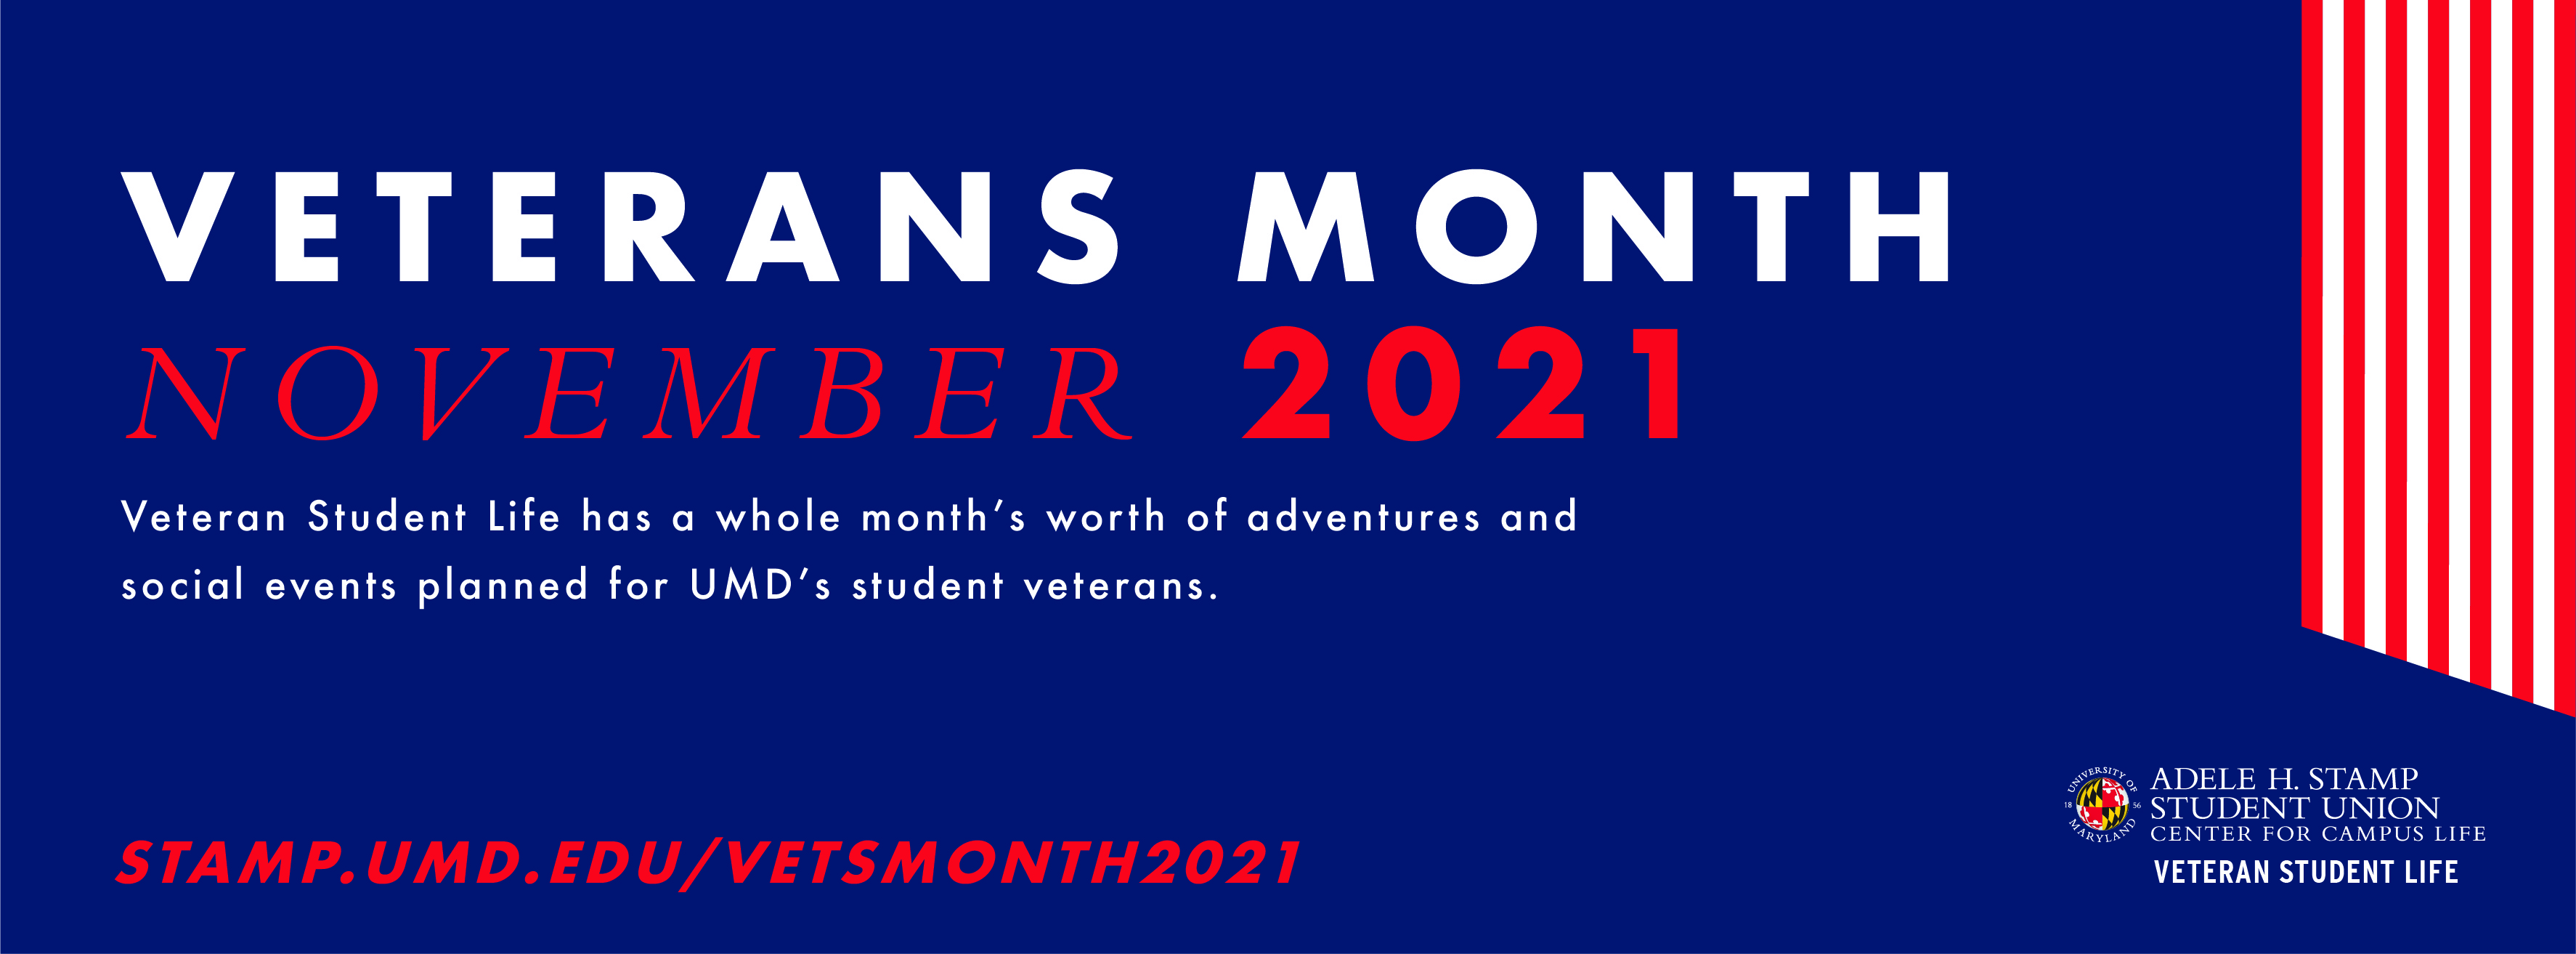 Veterans Month 2021